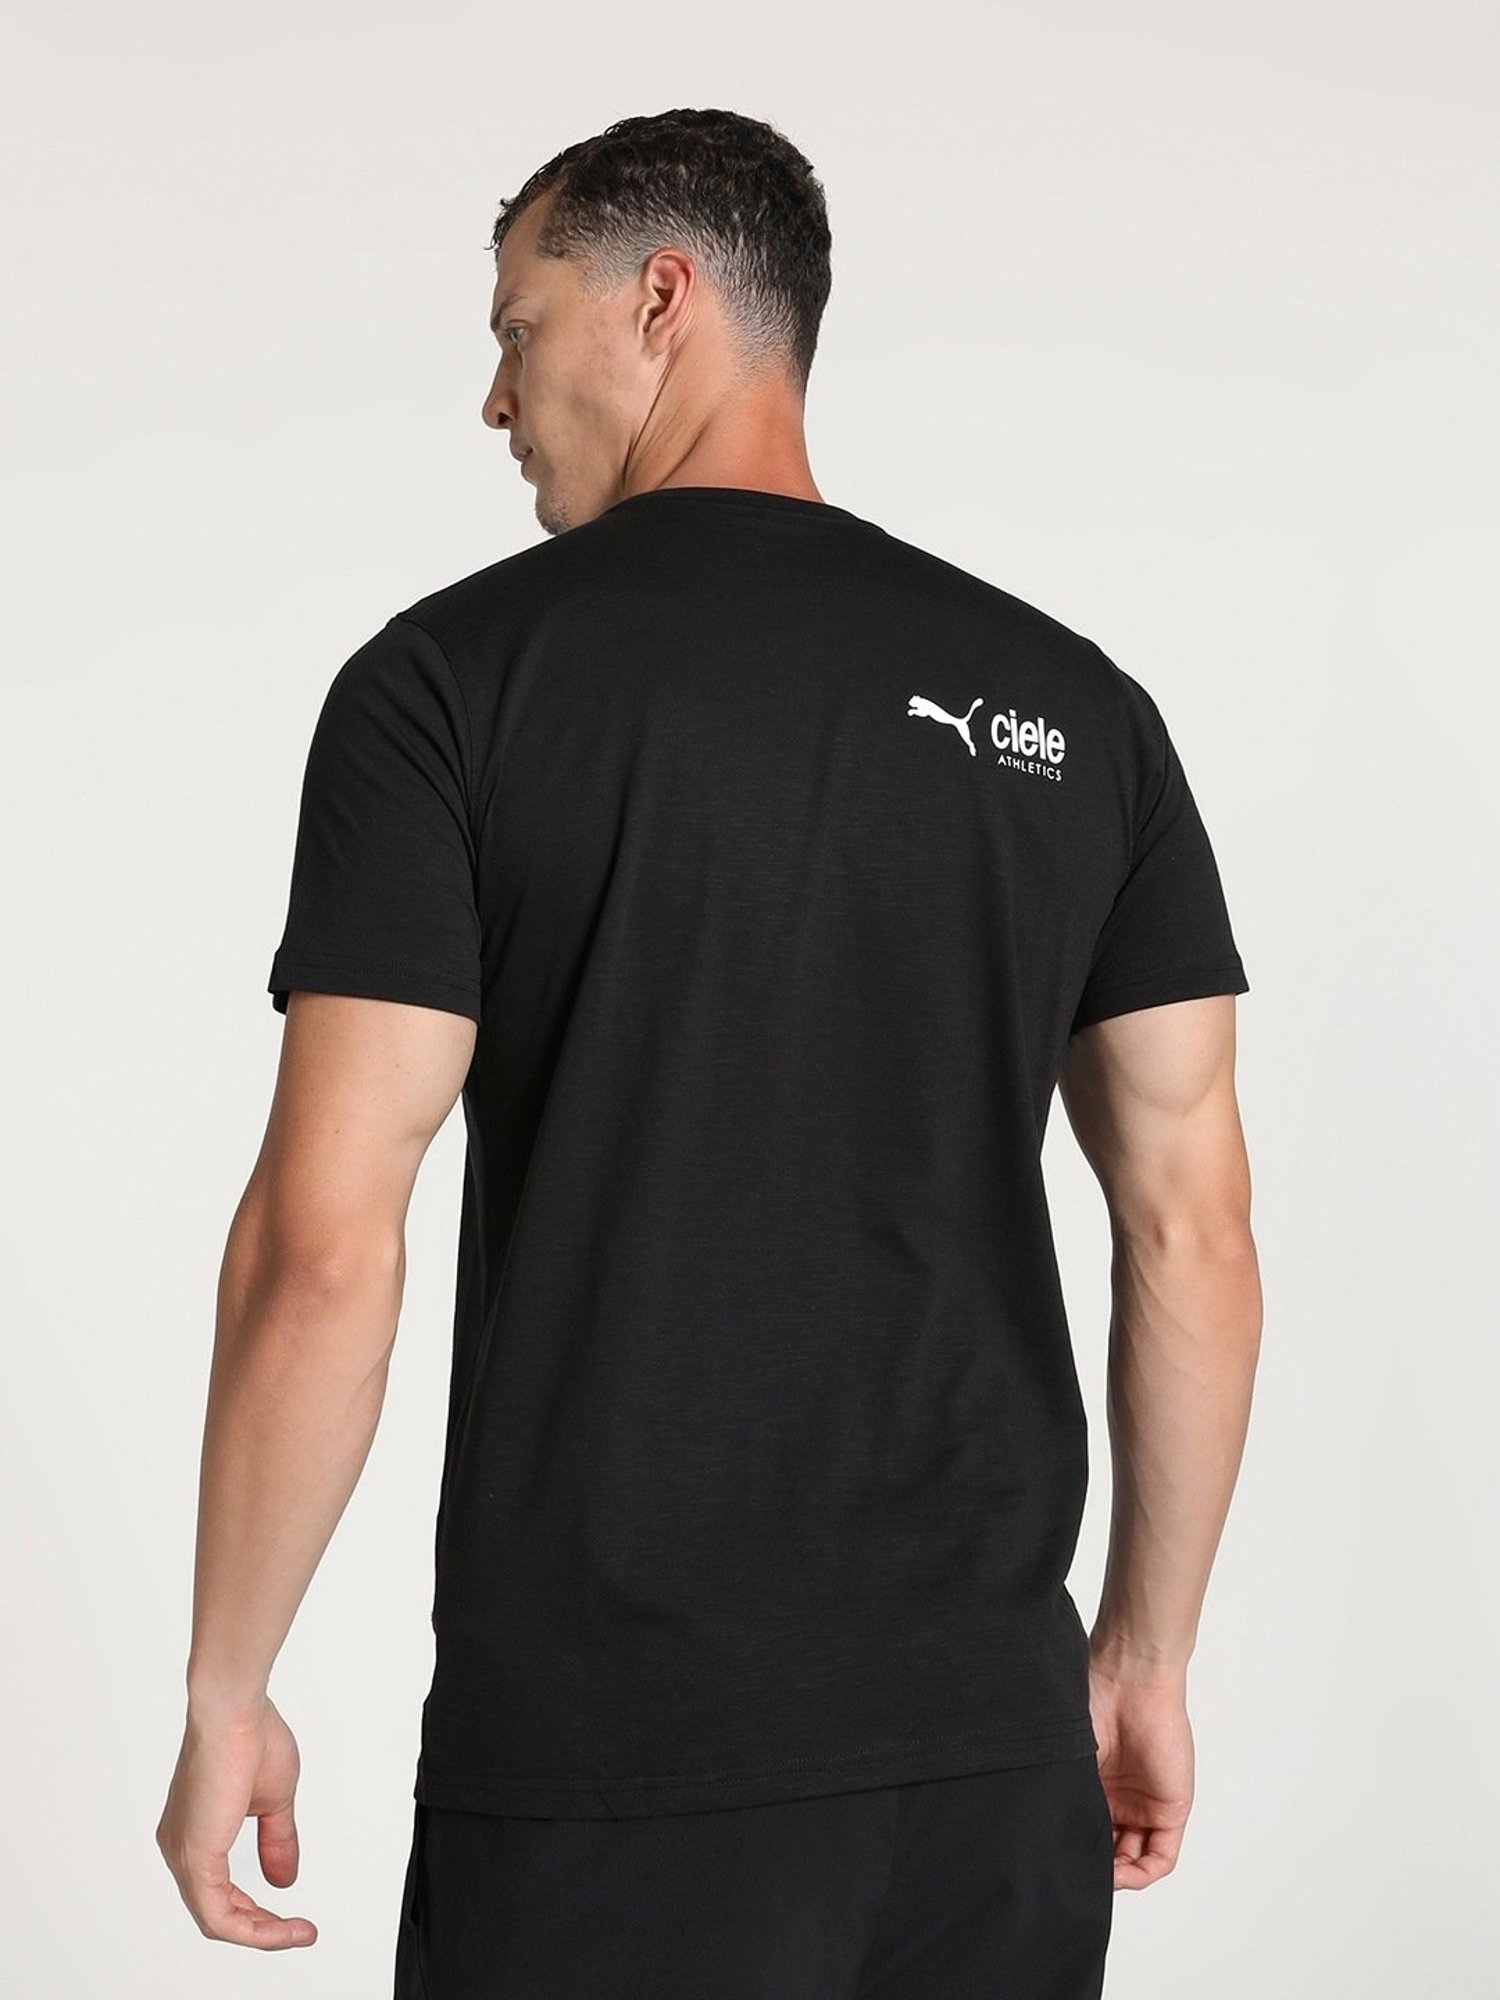 Buy Puma Trash Talk Black T-Shirt